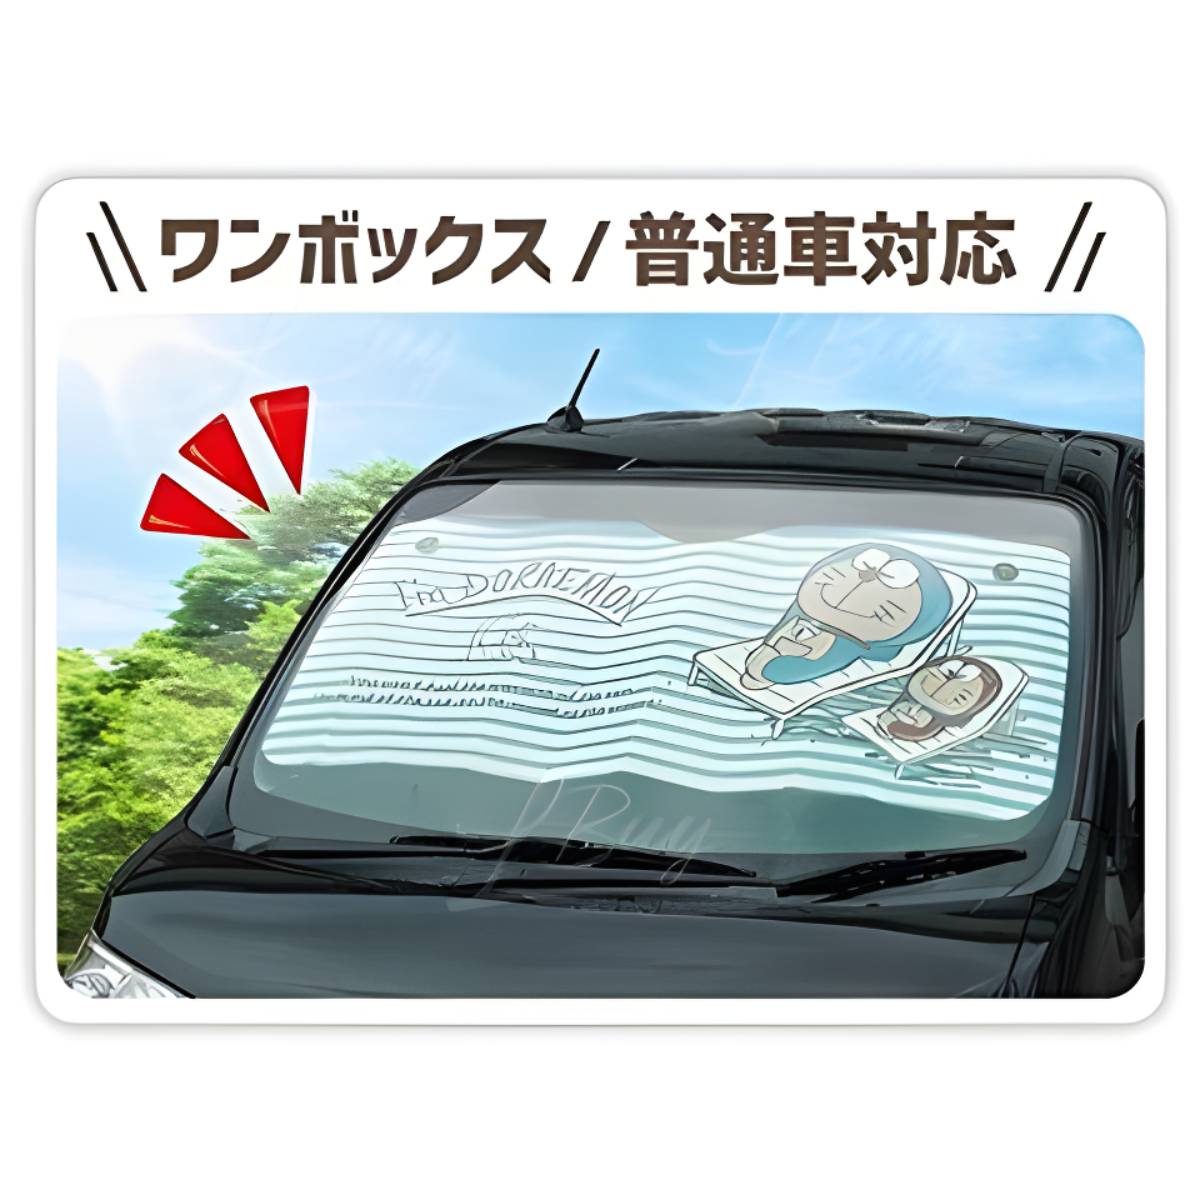 Sunshade - Doraemon Sun Tanning (Japan Edition)